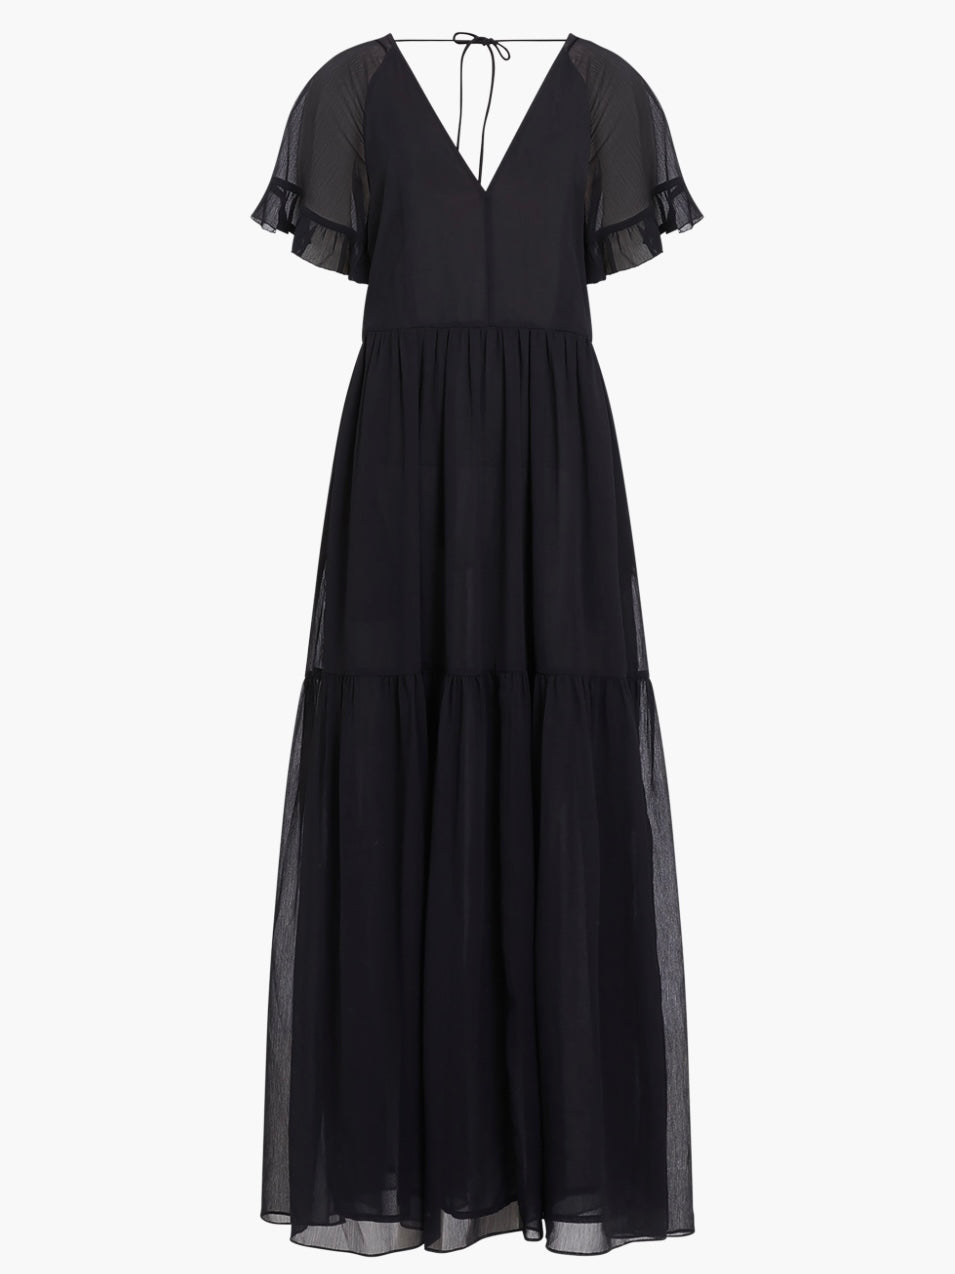 Black Chiffon Maxi Dress by Great Plains